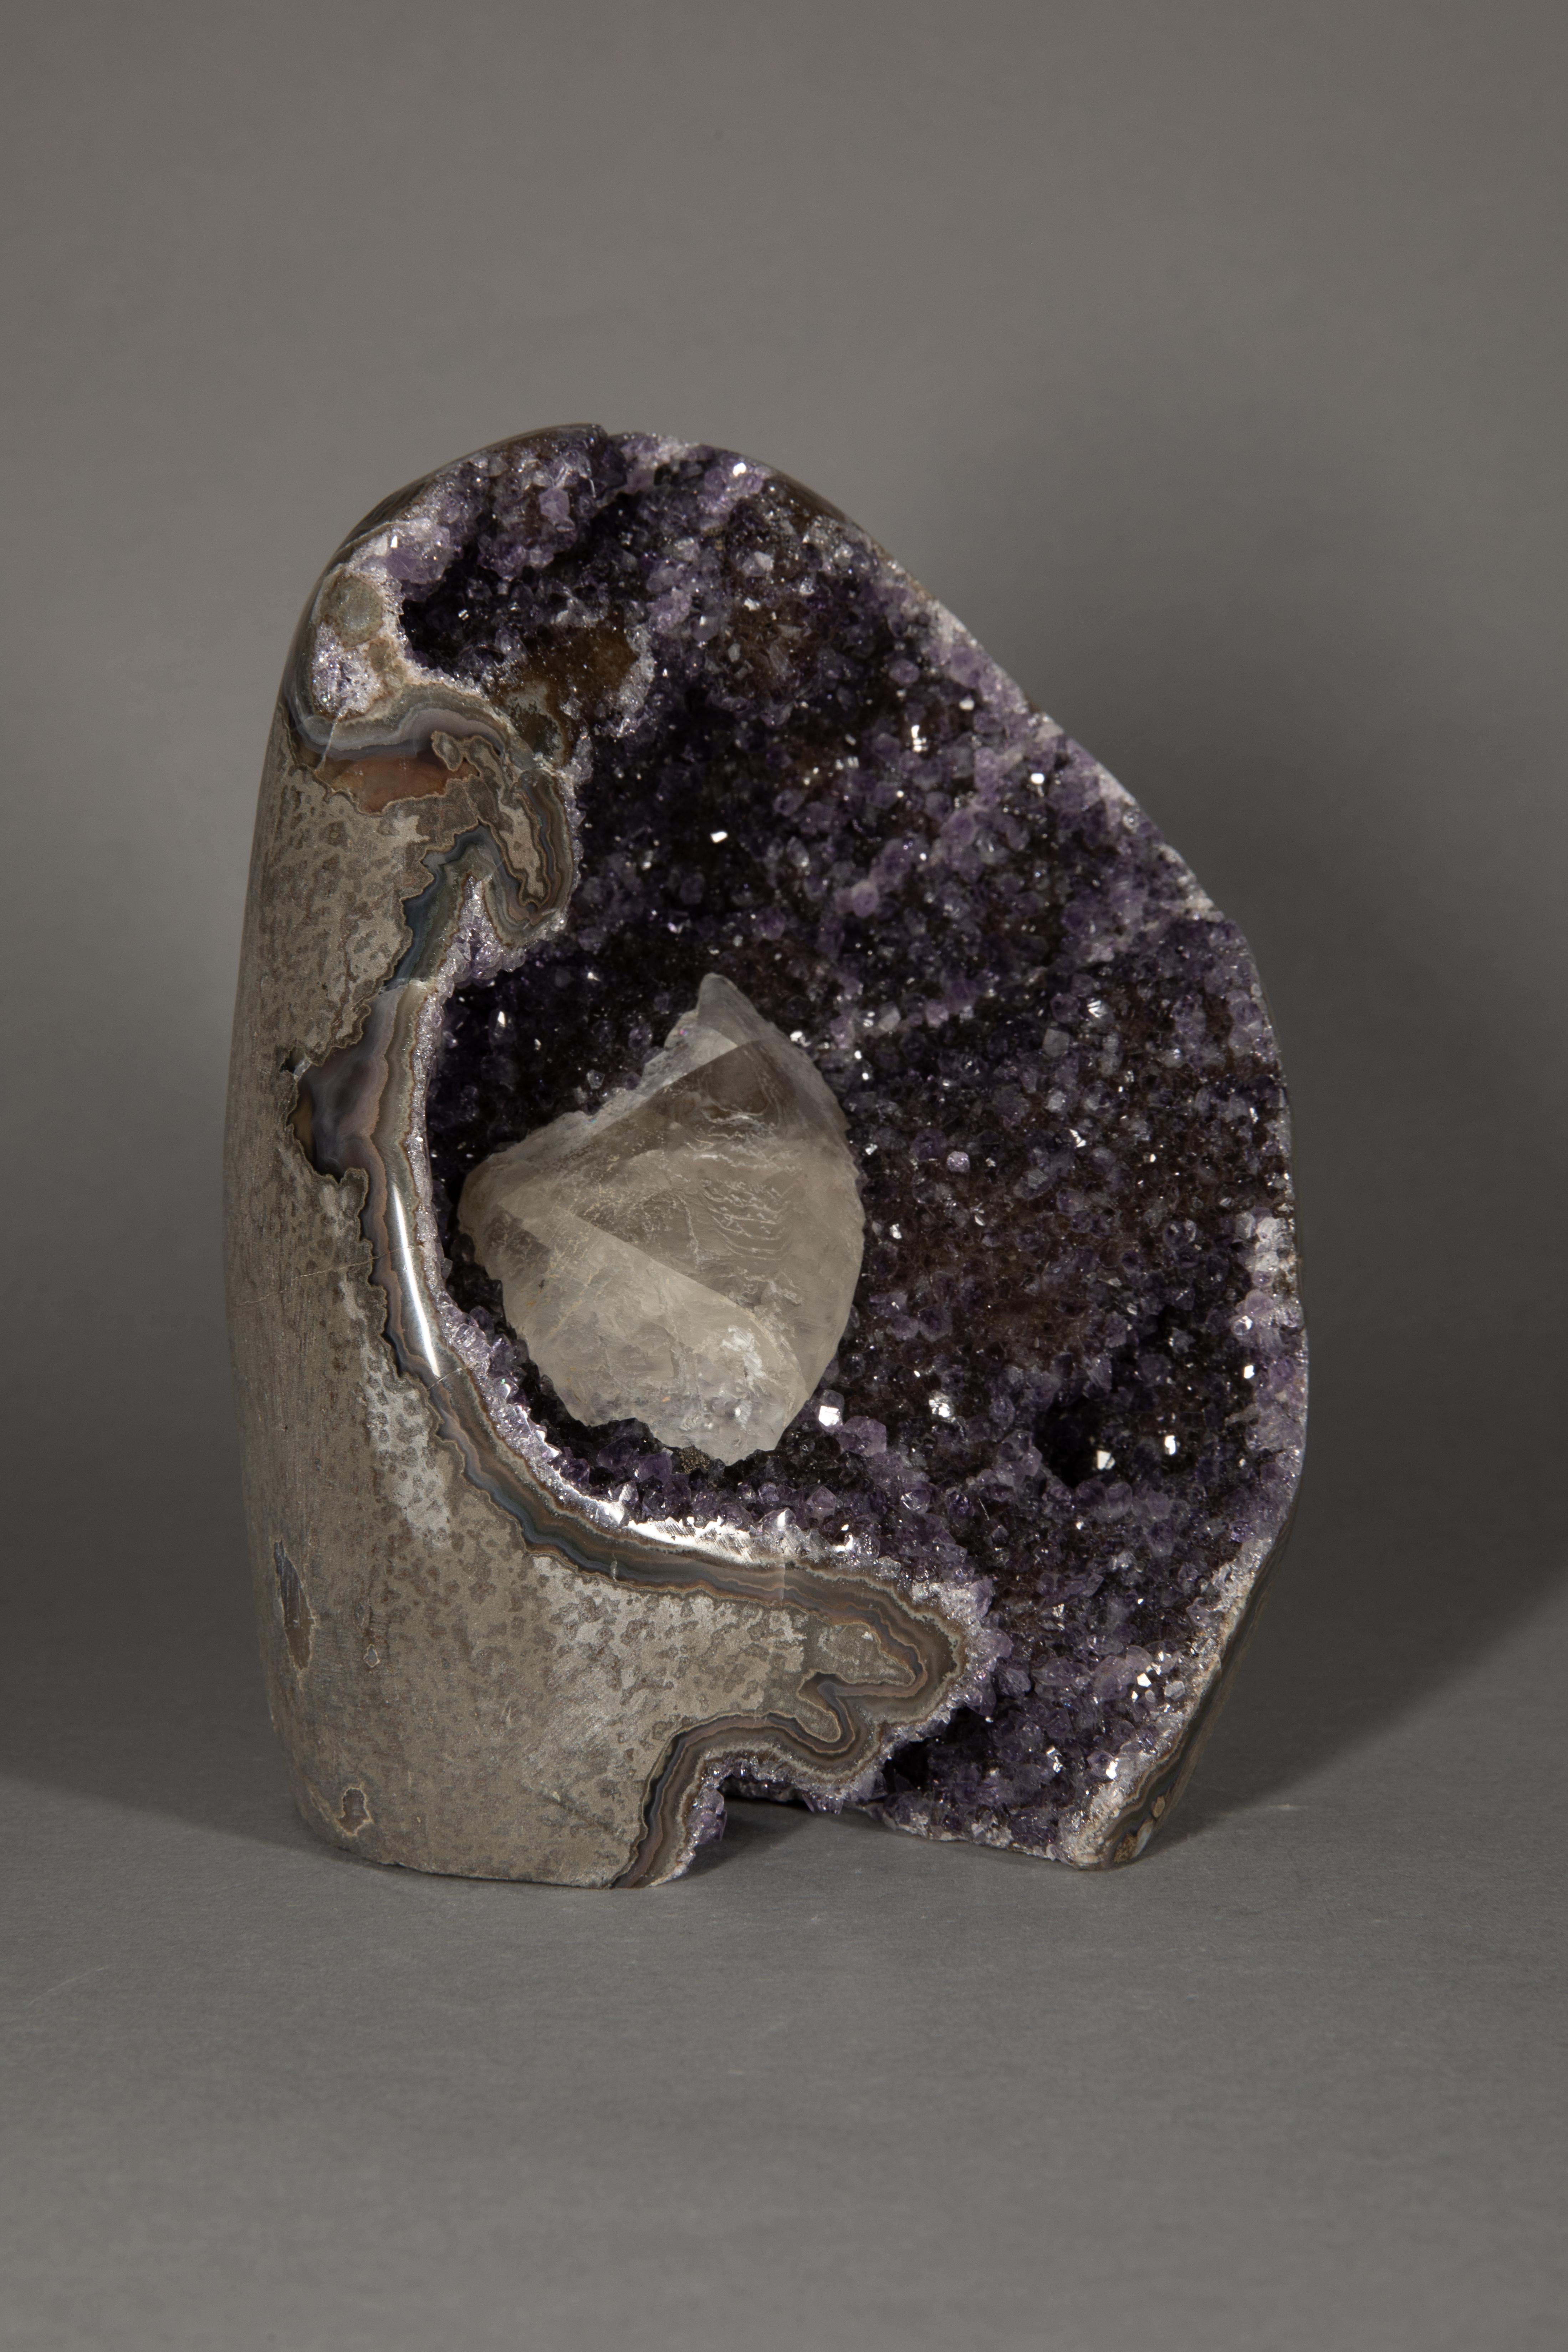 Amethyst Purple Druze Quartz with Calcite Formation 3